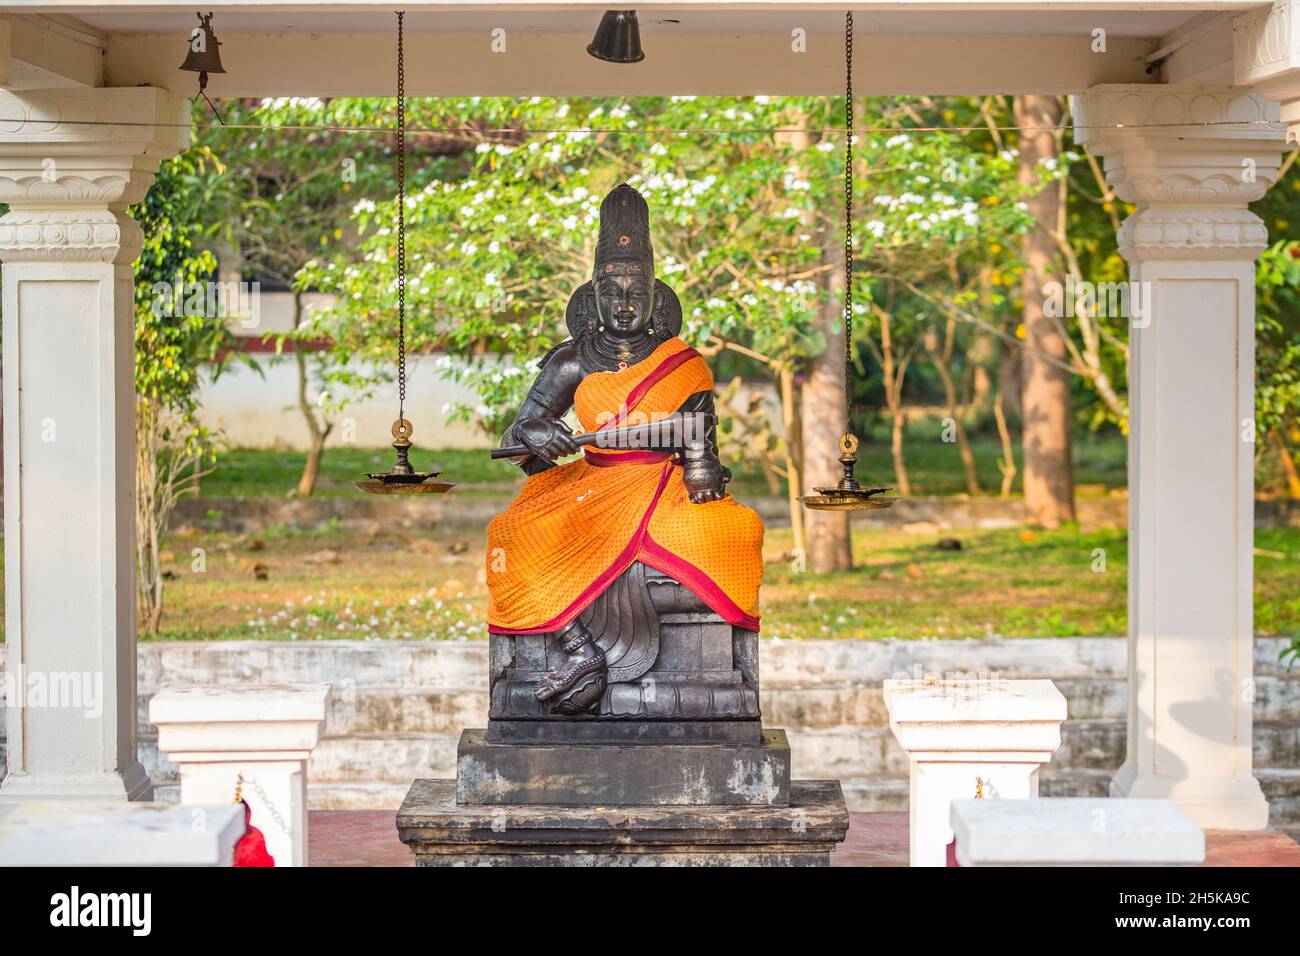 Santuario indù con una statua di una divinità avvolta in seta arancione nel villaggio rurale a CGH terra proprietà di Mantra Koodam in Kumbakonam Foto Stock